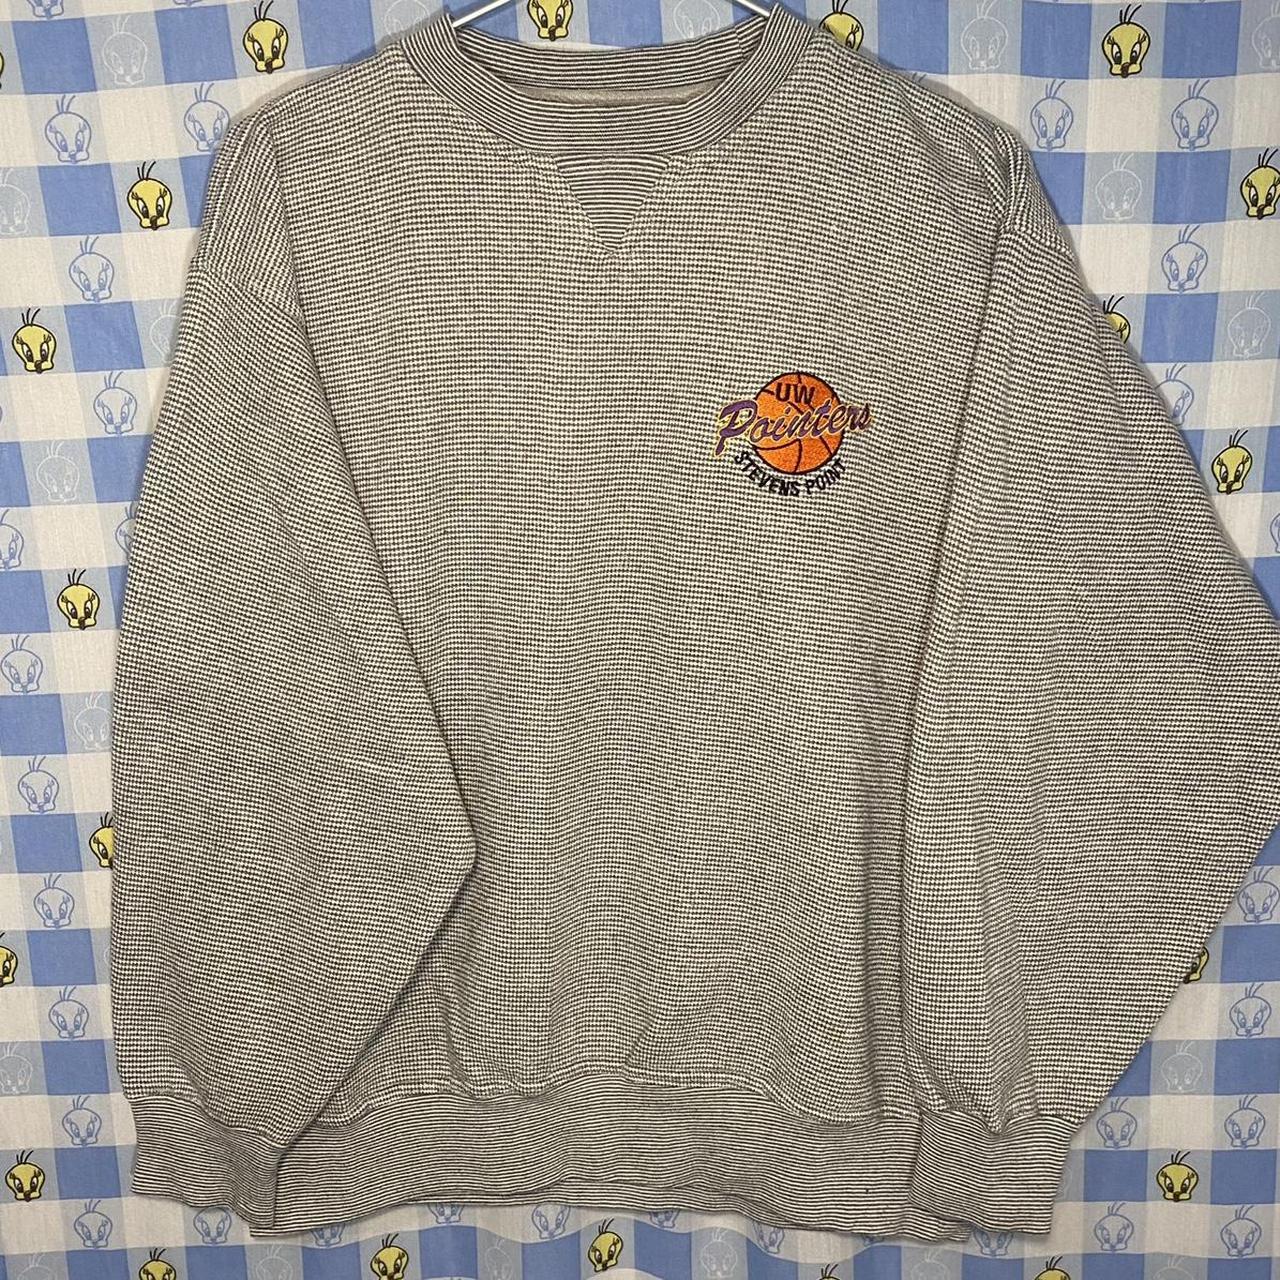 Product Image 1 - Wisconsin SP basketball sweatshirt
UWSP Stevens